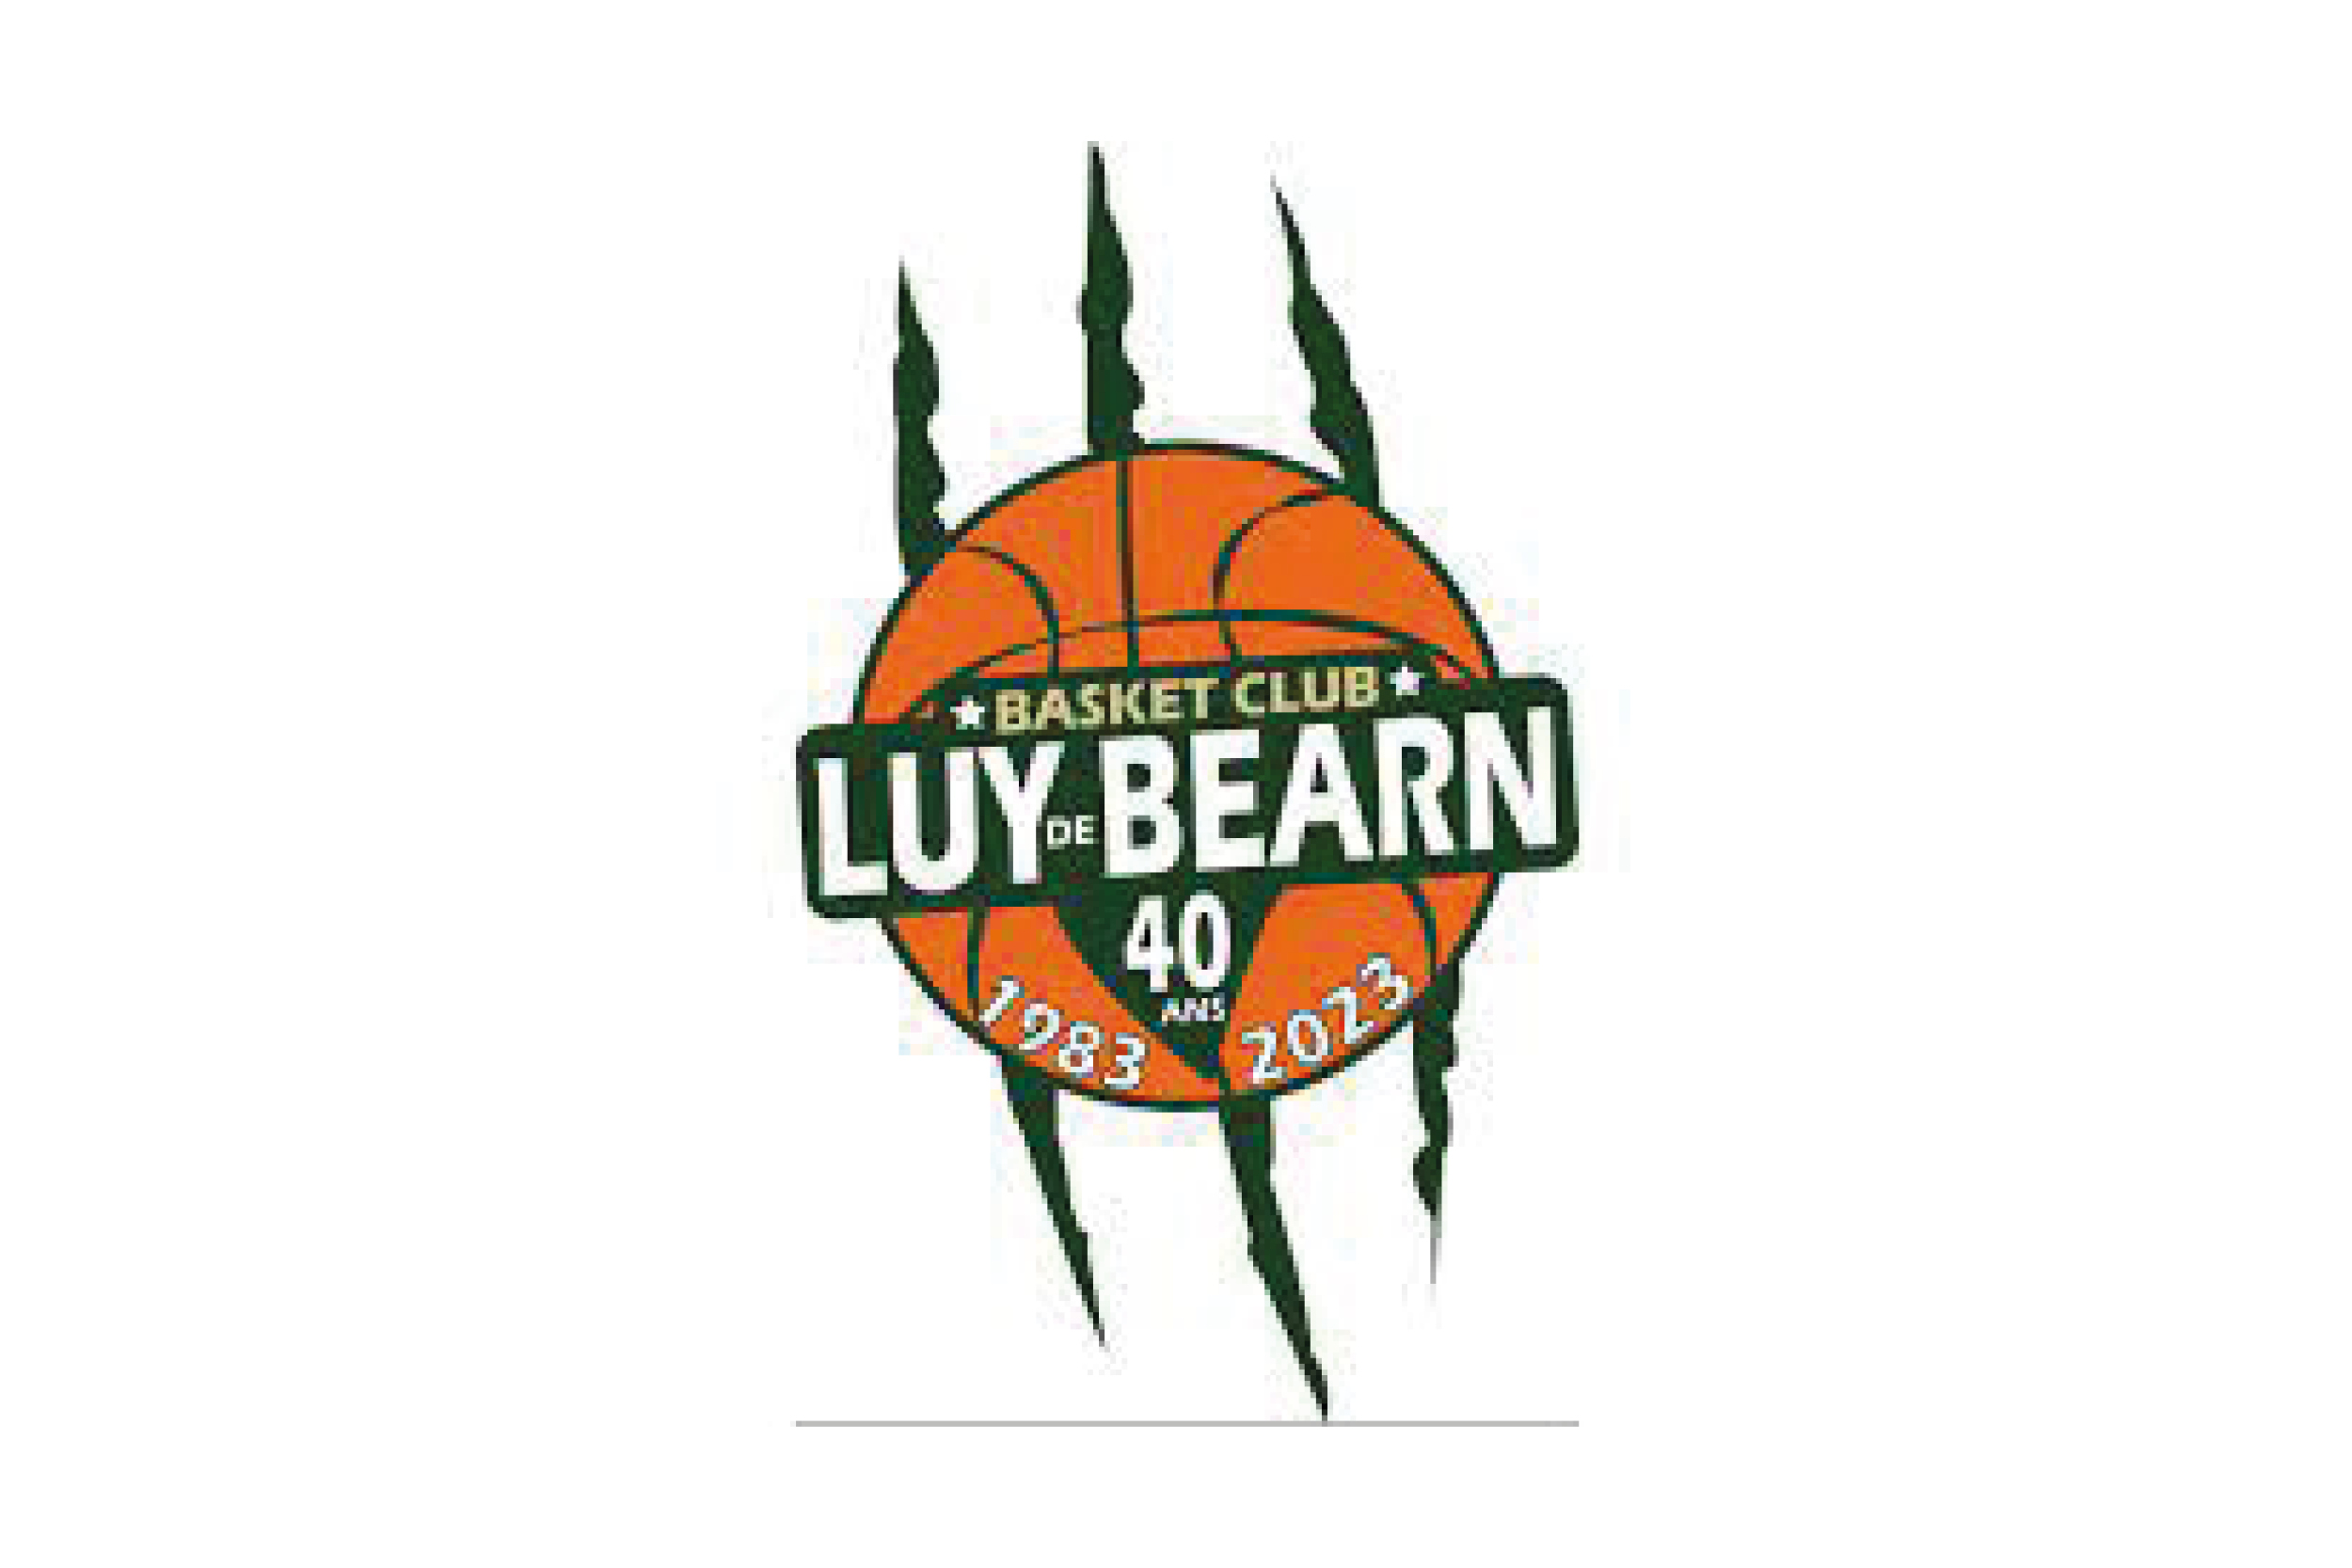 Basket Club Luy de Bearn - Logo